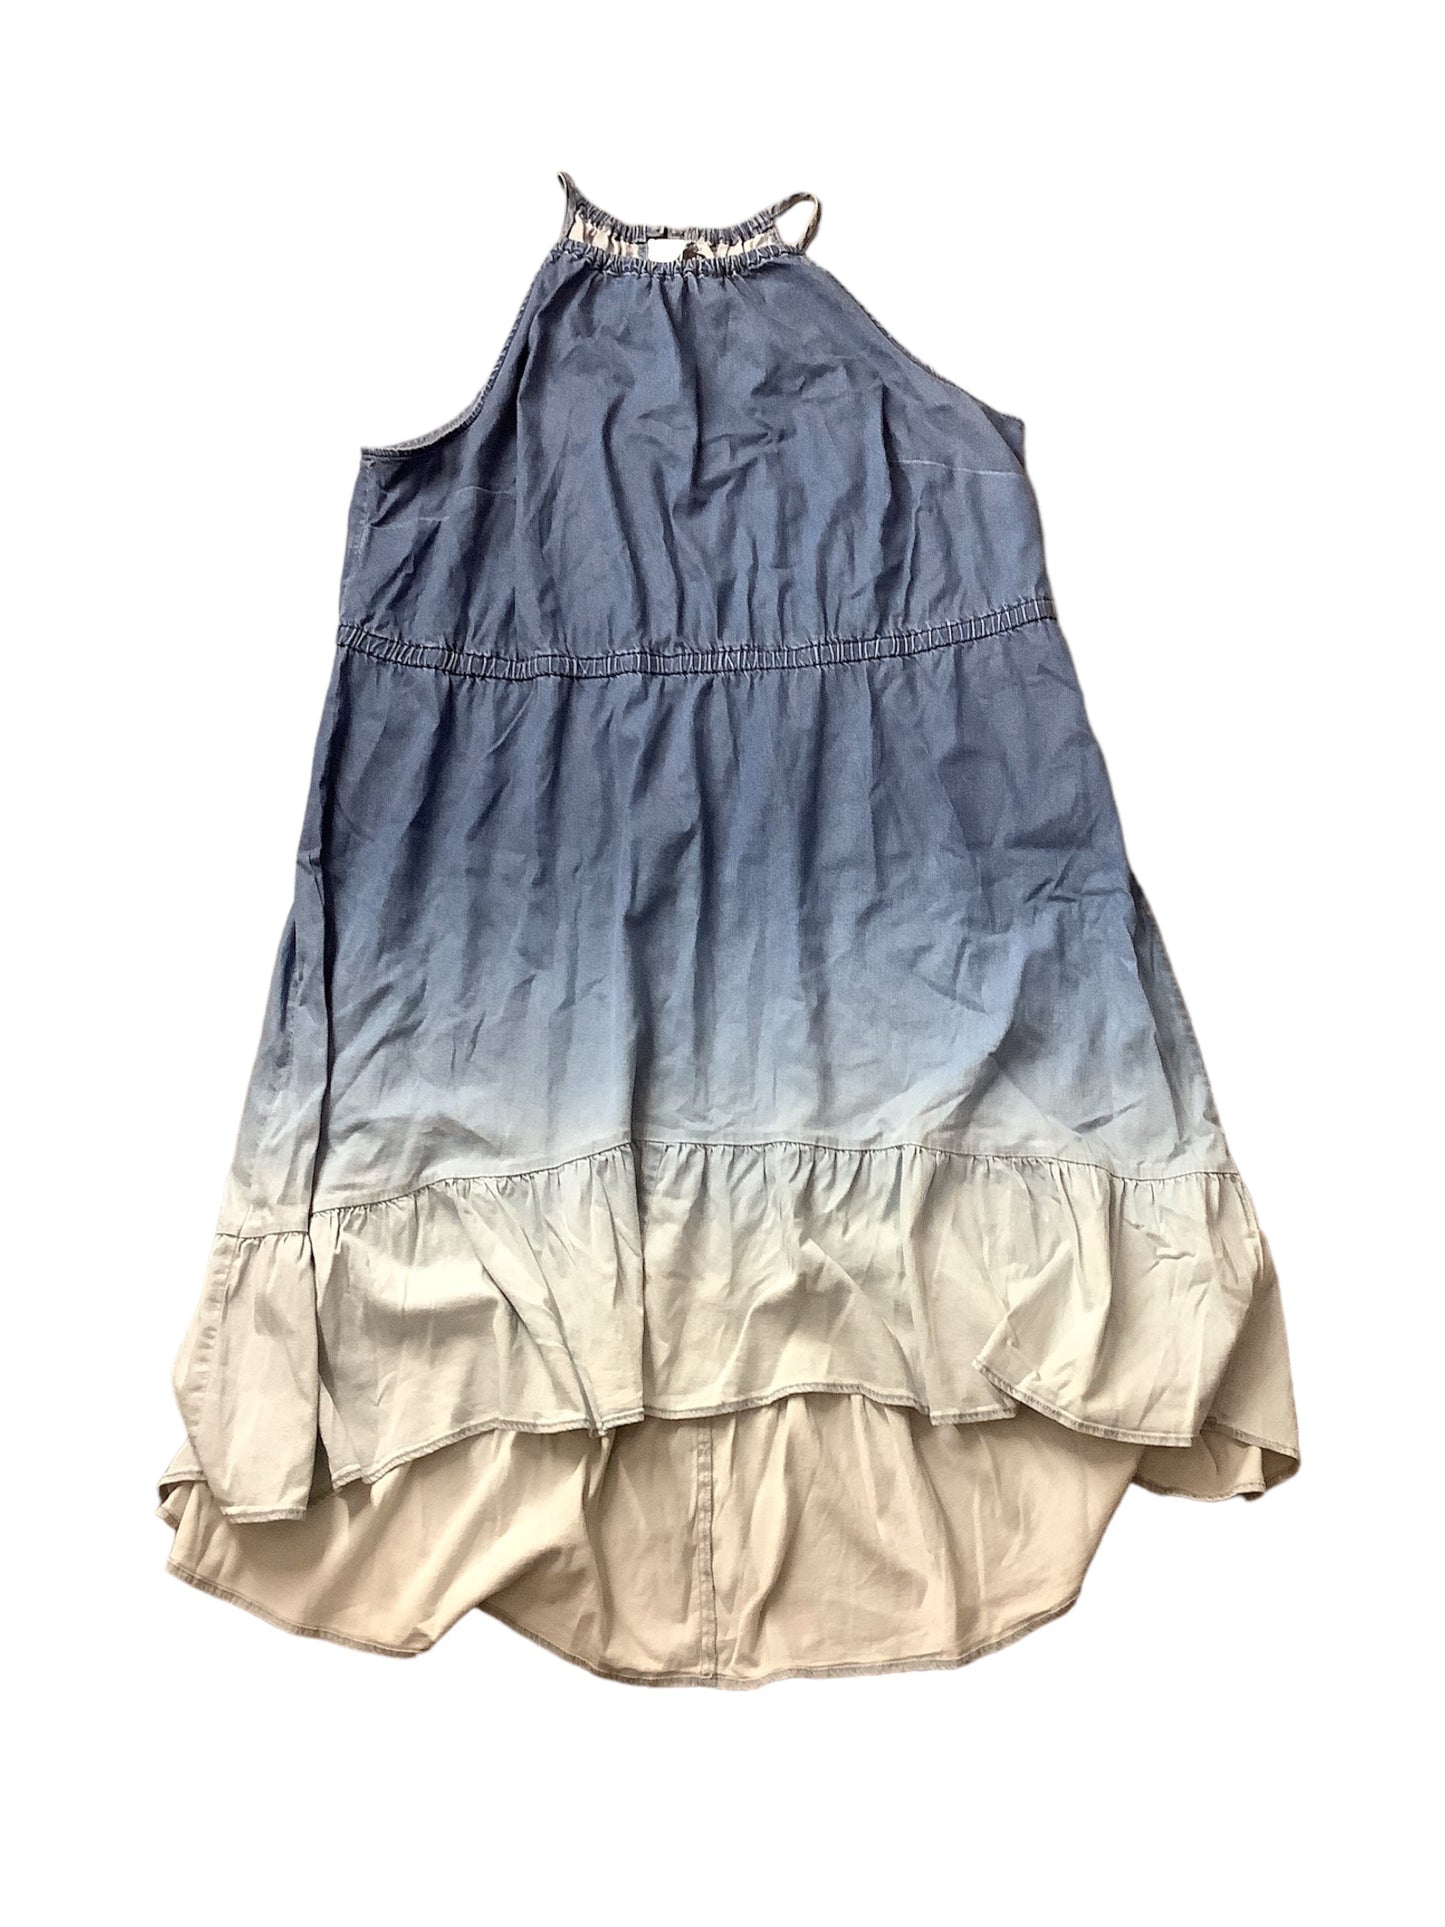 Blue Denim Dress Casual Maxi Inc, Size 4x